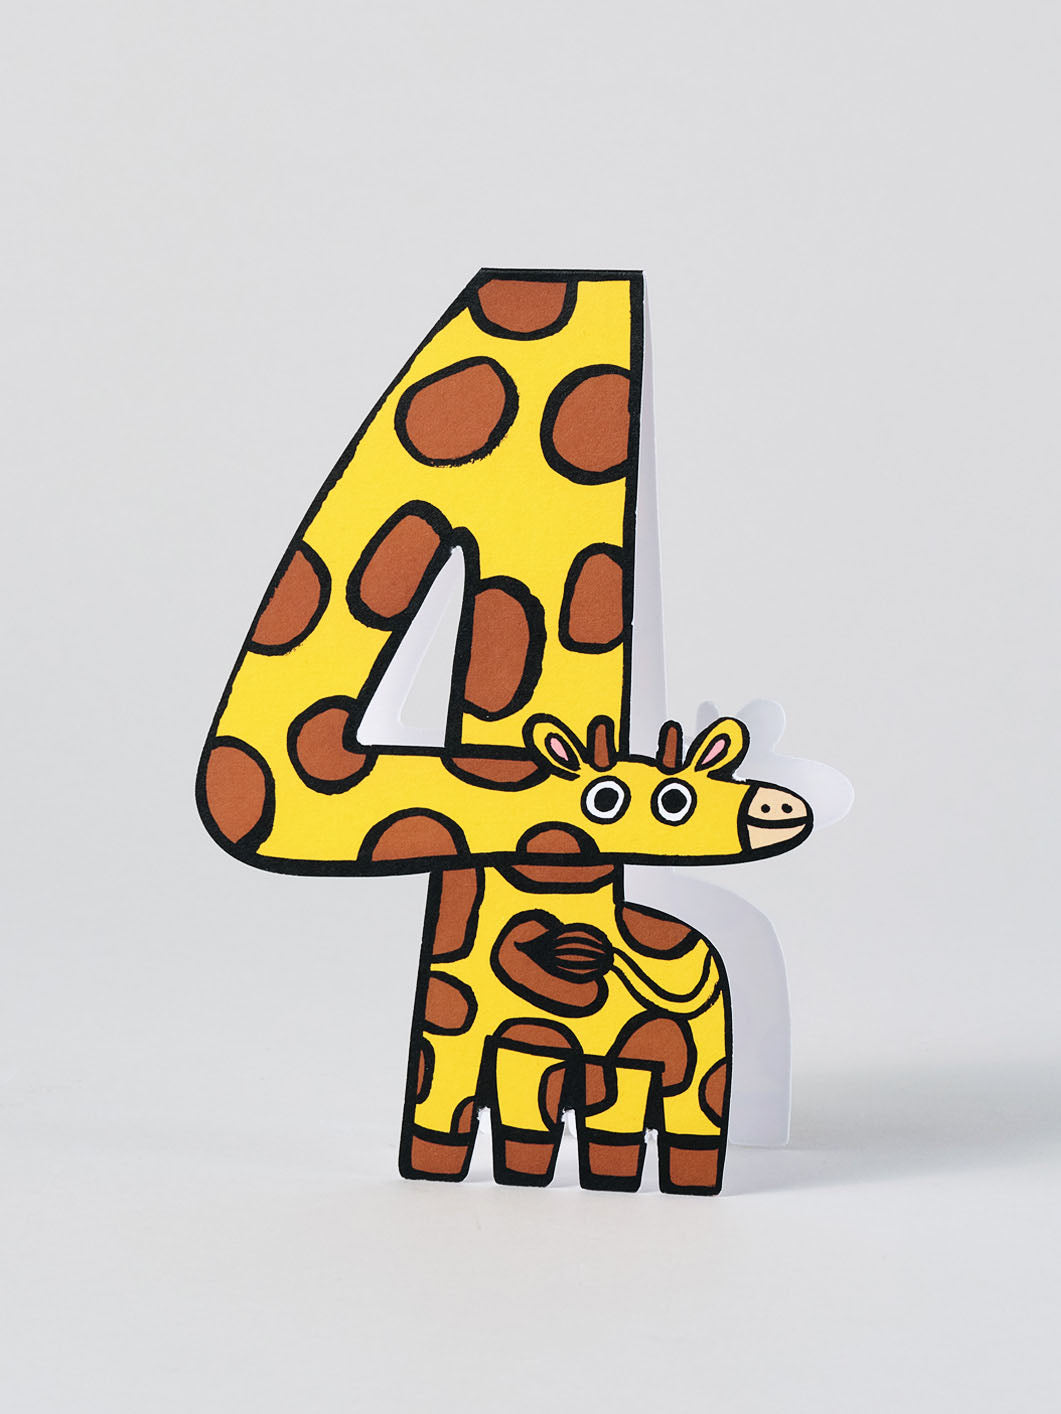 Giraffe 4th Birthday Card